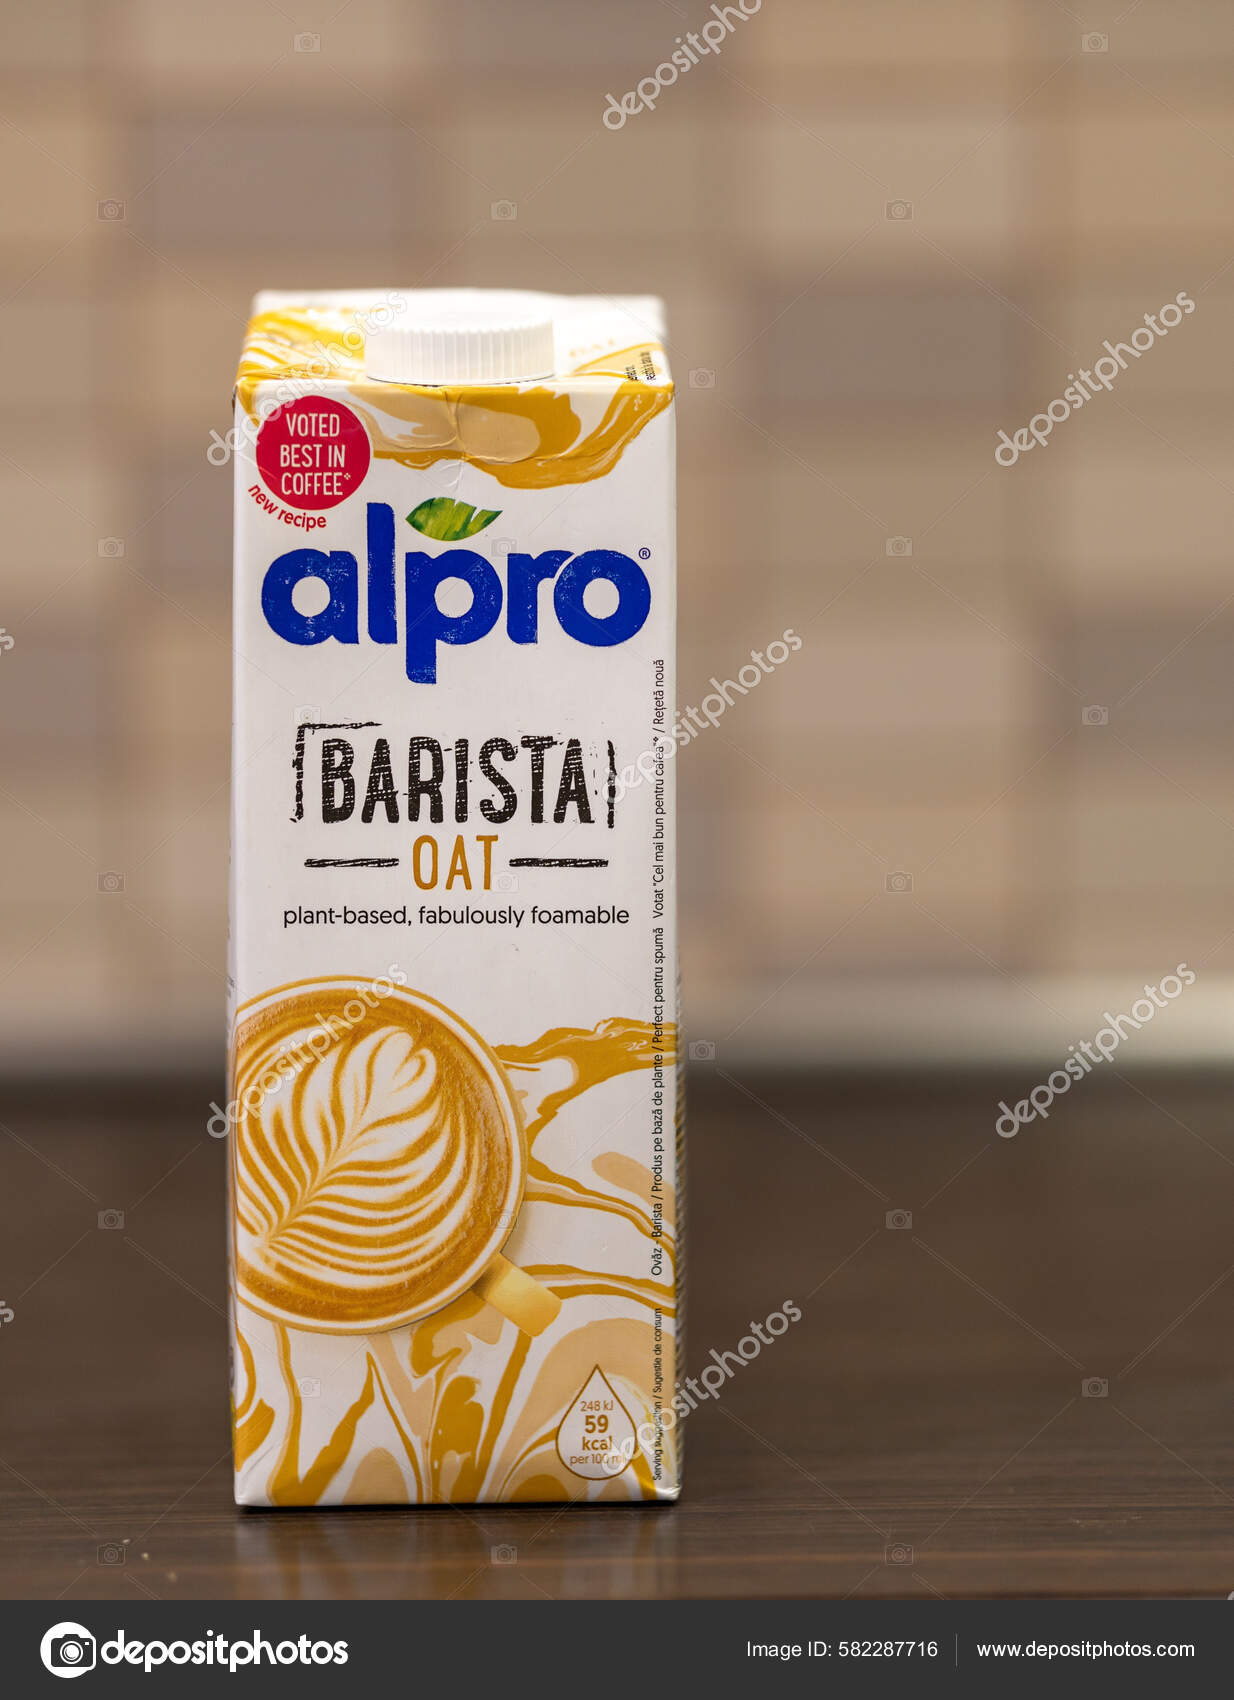 Alpro Brand Barista Oat Milk Paper Packaging Table Poland Poznan